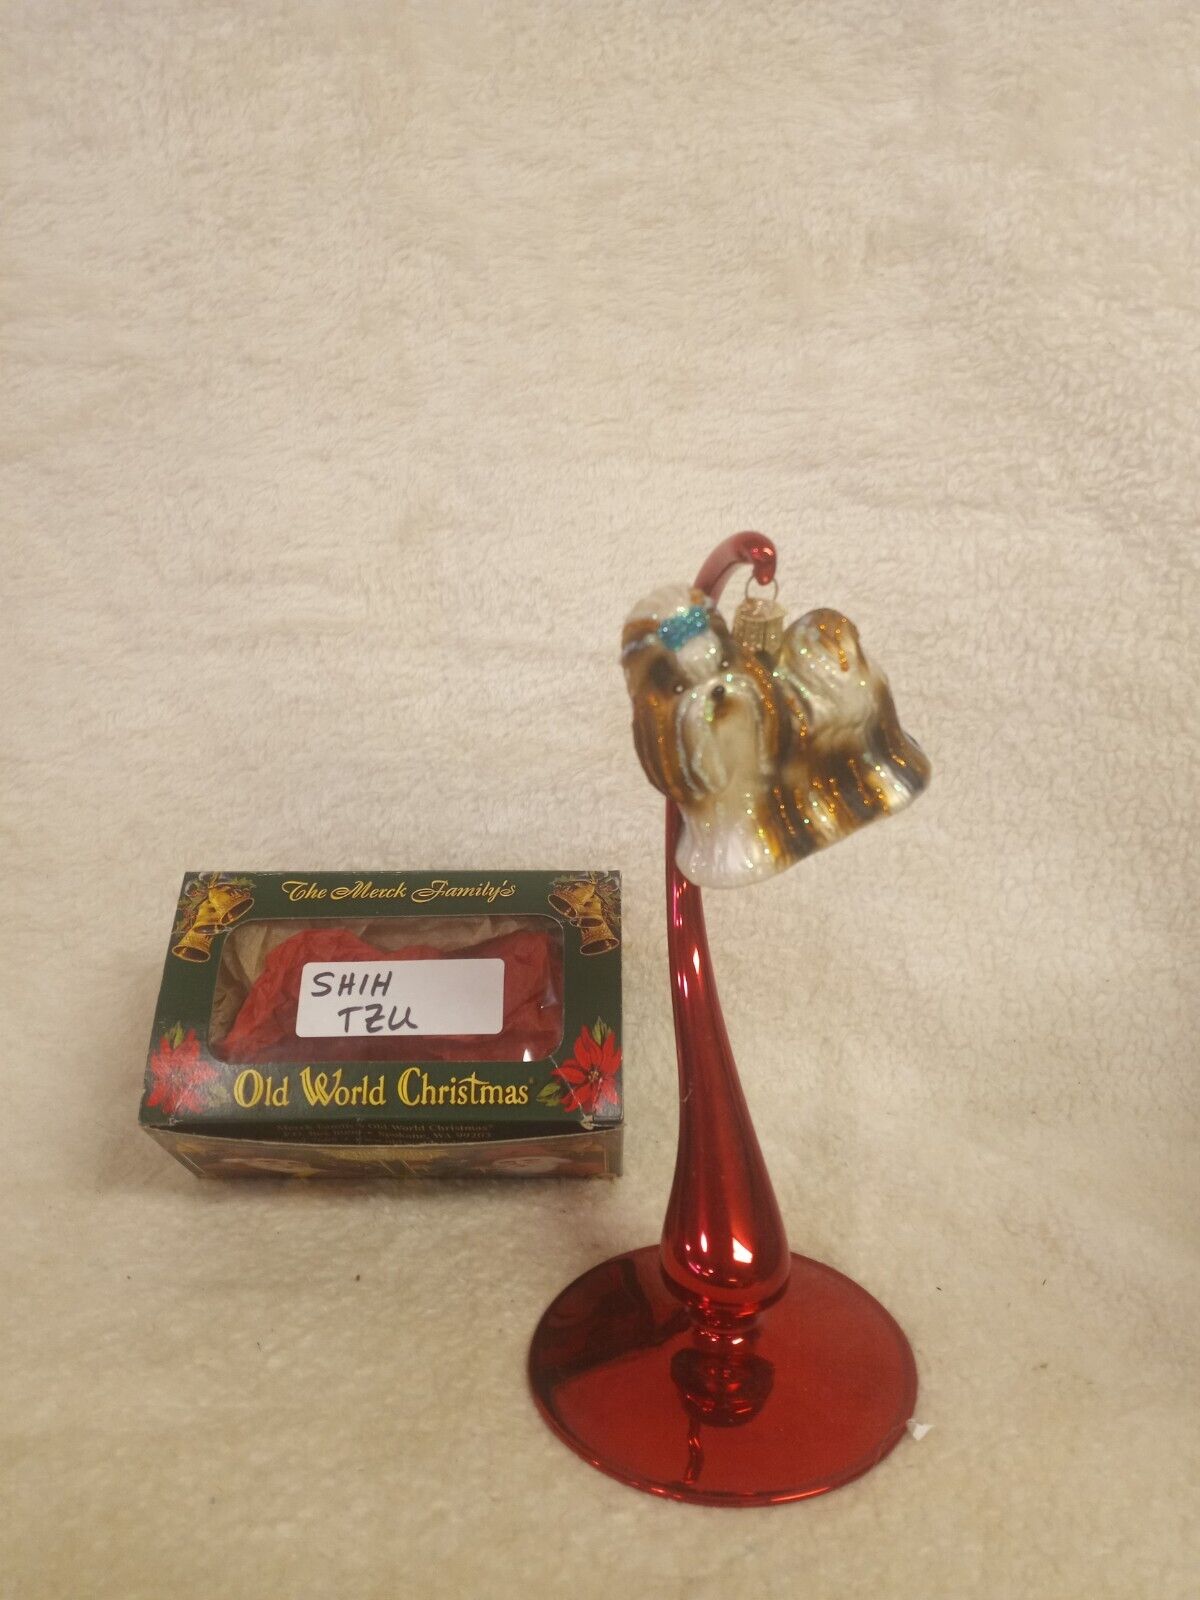  Old World Christmas Shih Tzu Dog Merck Family Glass Ornament 2001 